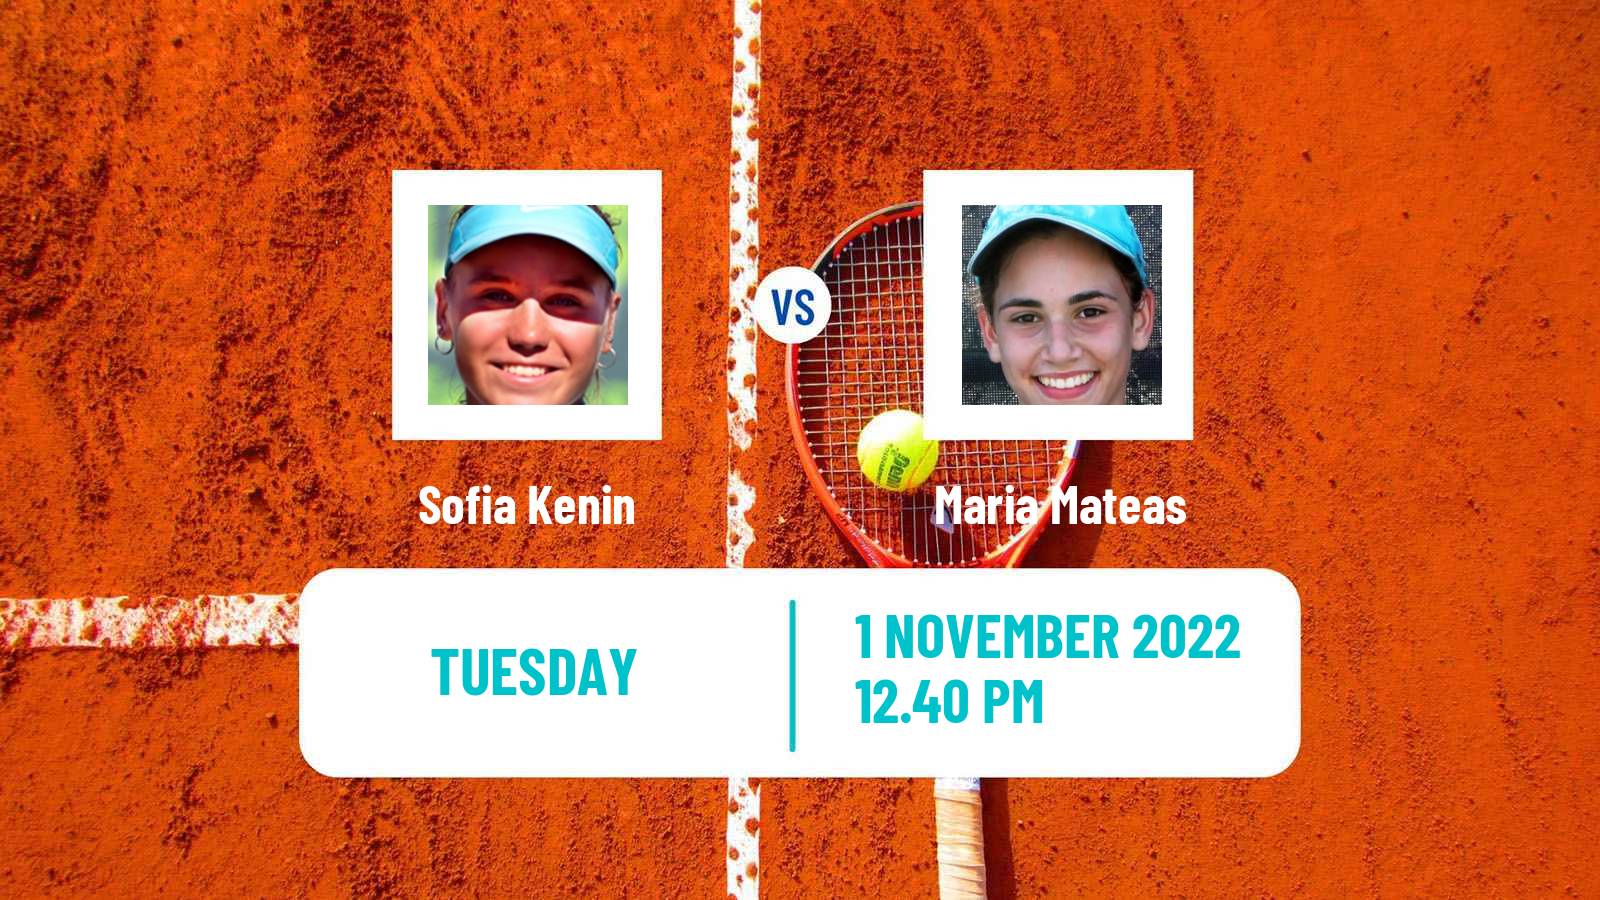 Tennis ATP Challenger Sofia Kenin - Maria Mateas